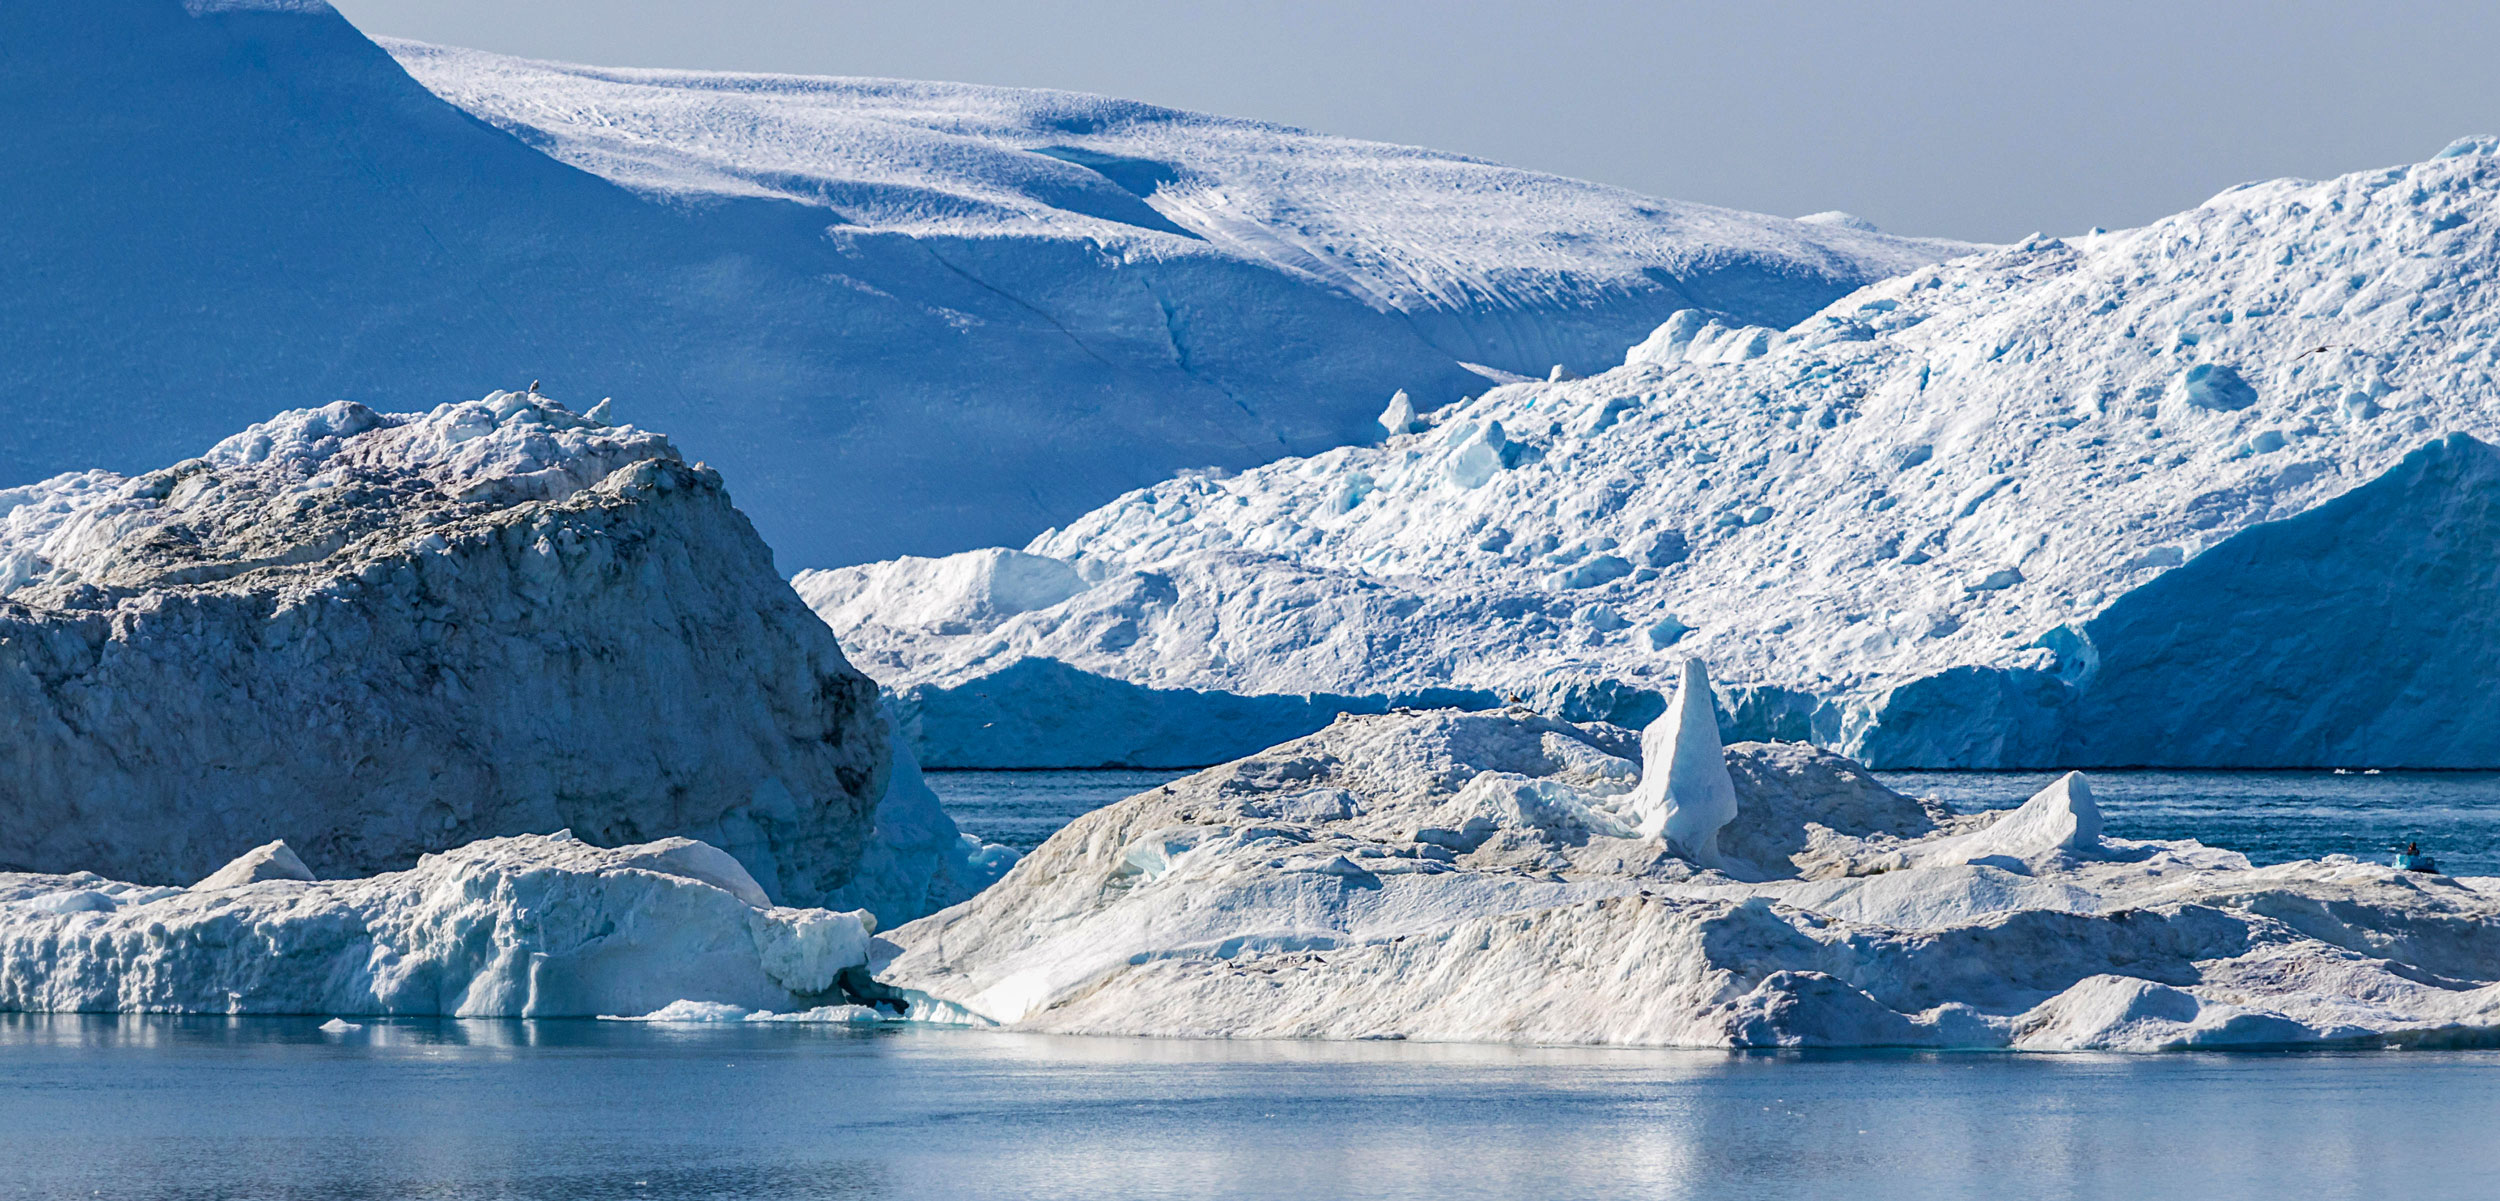 Detail of the Jakobshavn Glacier also knows as Ilulissat glacier in Greenland